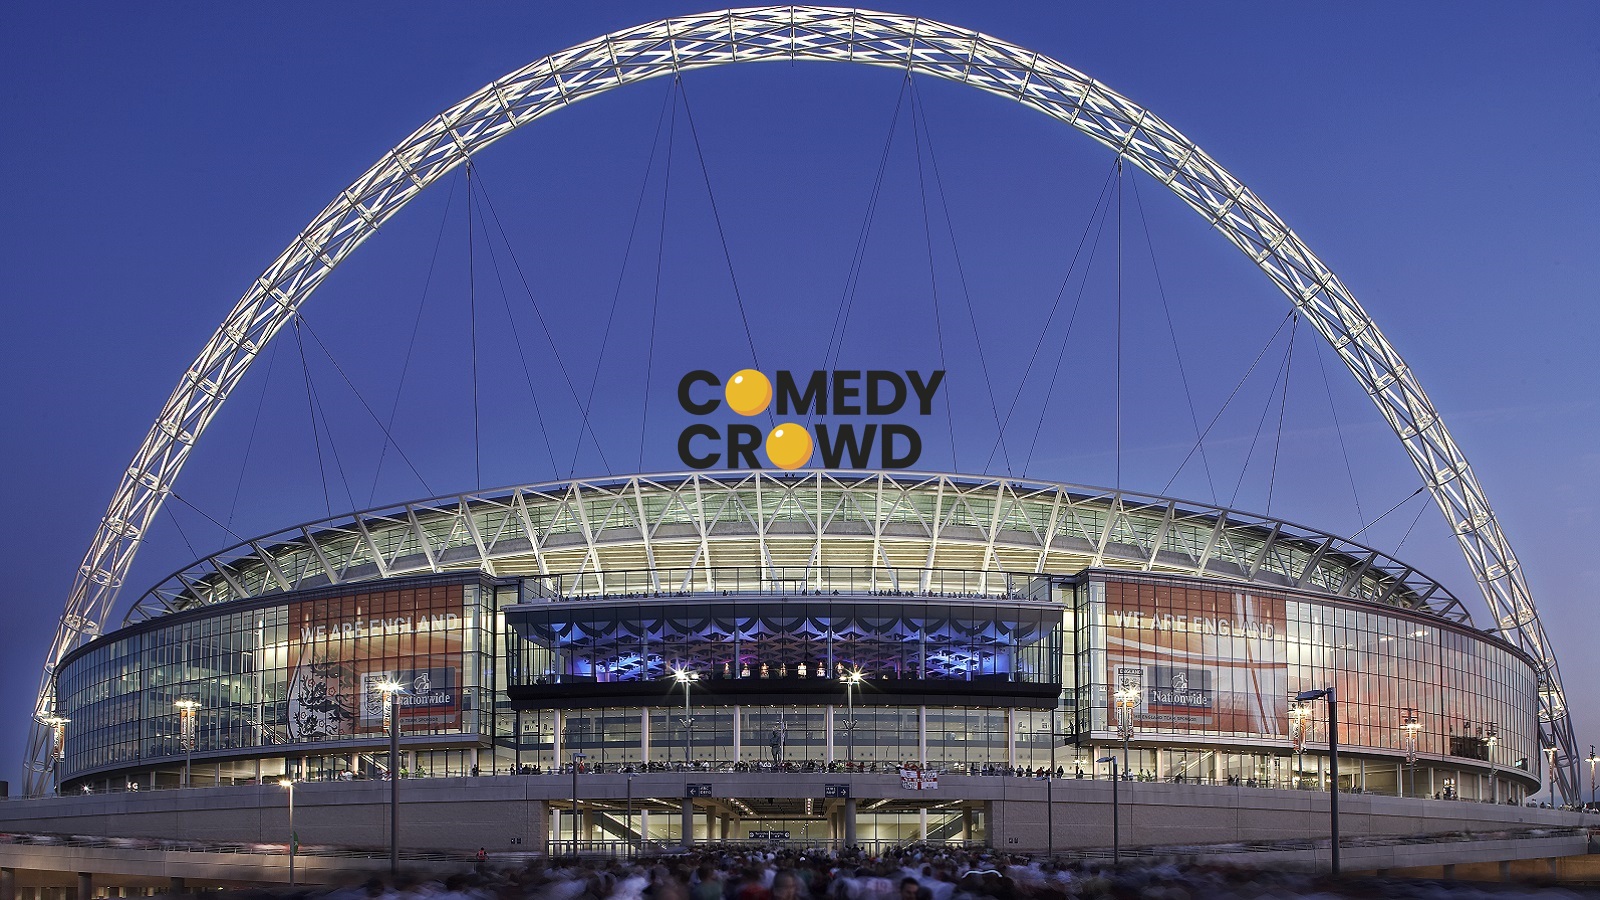 Wembley_Comedy Crowd Meetup